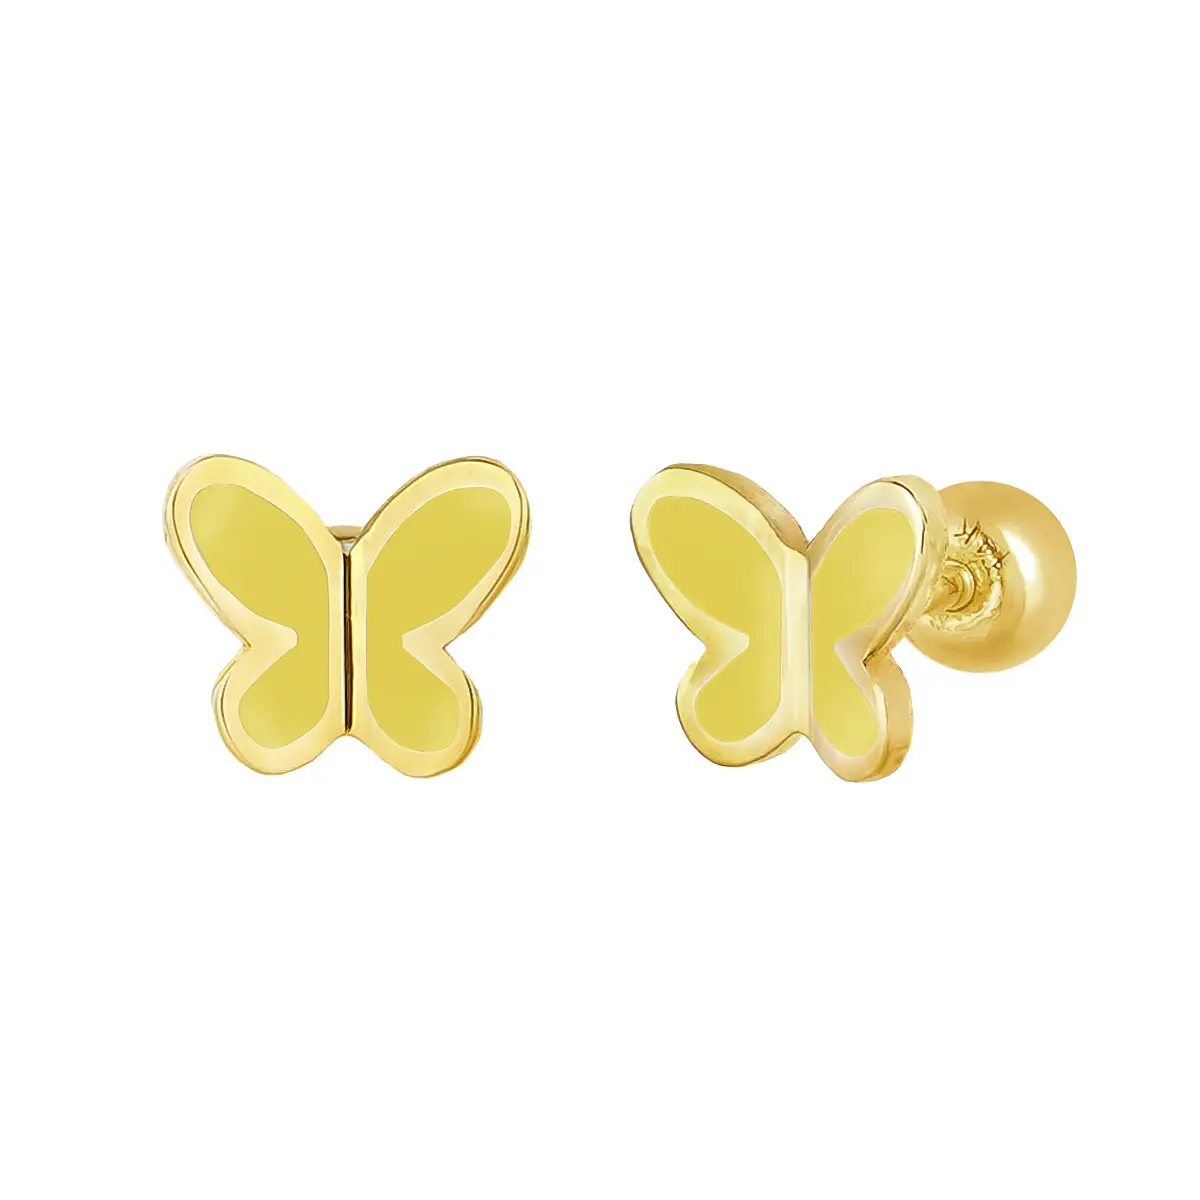 [Artpierce] 14k Gold Flat Color Butterfly Basic Piercing White Pink Yellow Black Establishing Itself As A Top Brand Jewelry